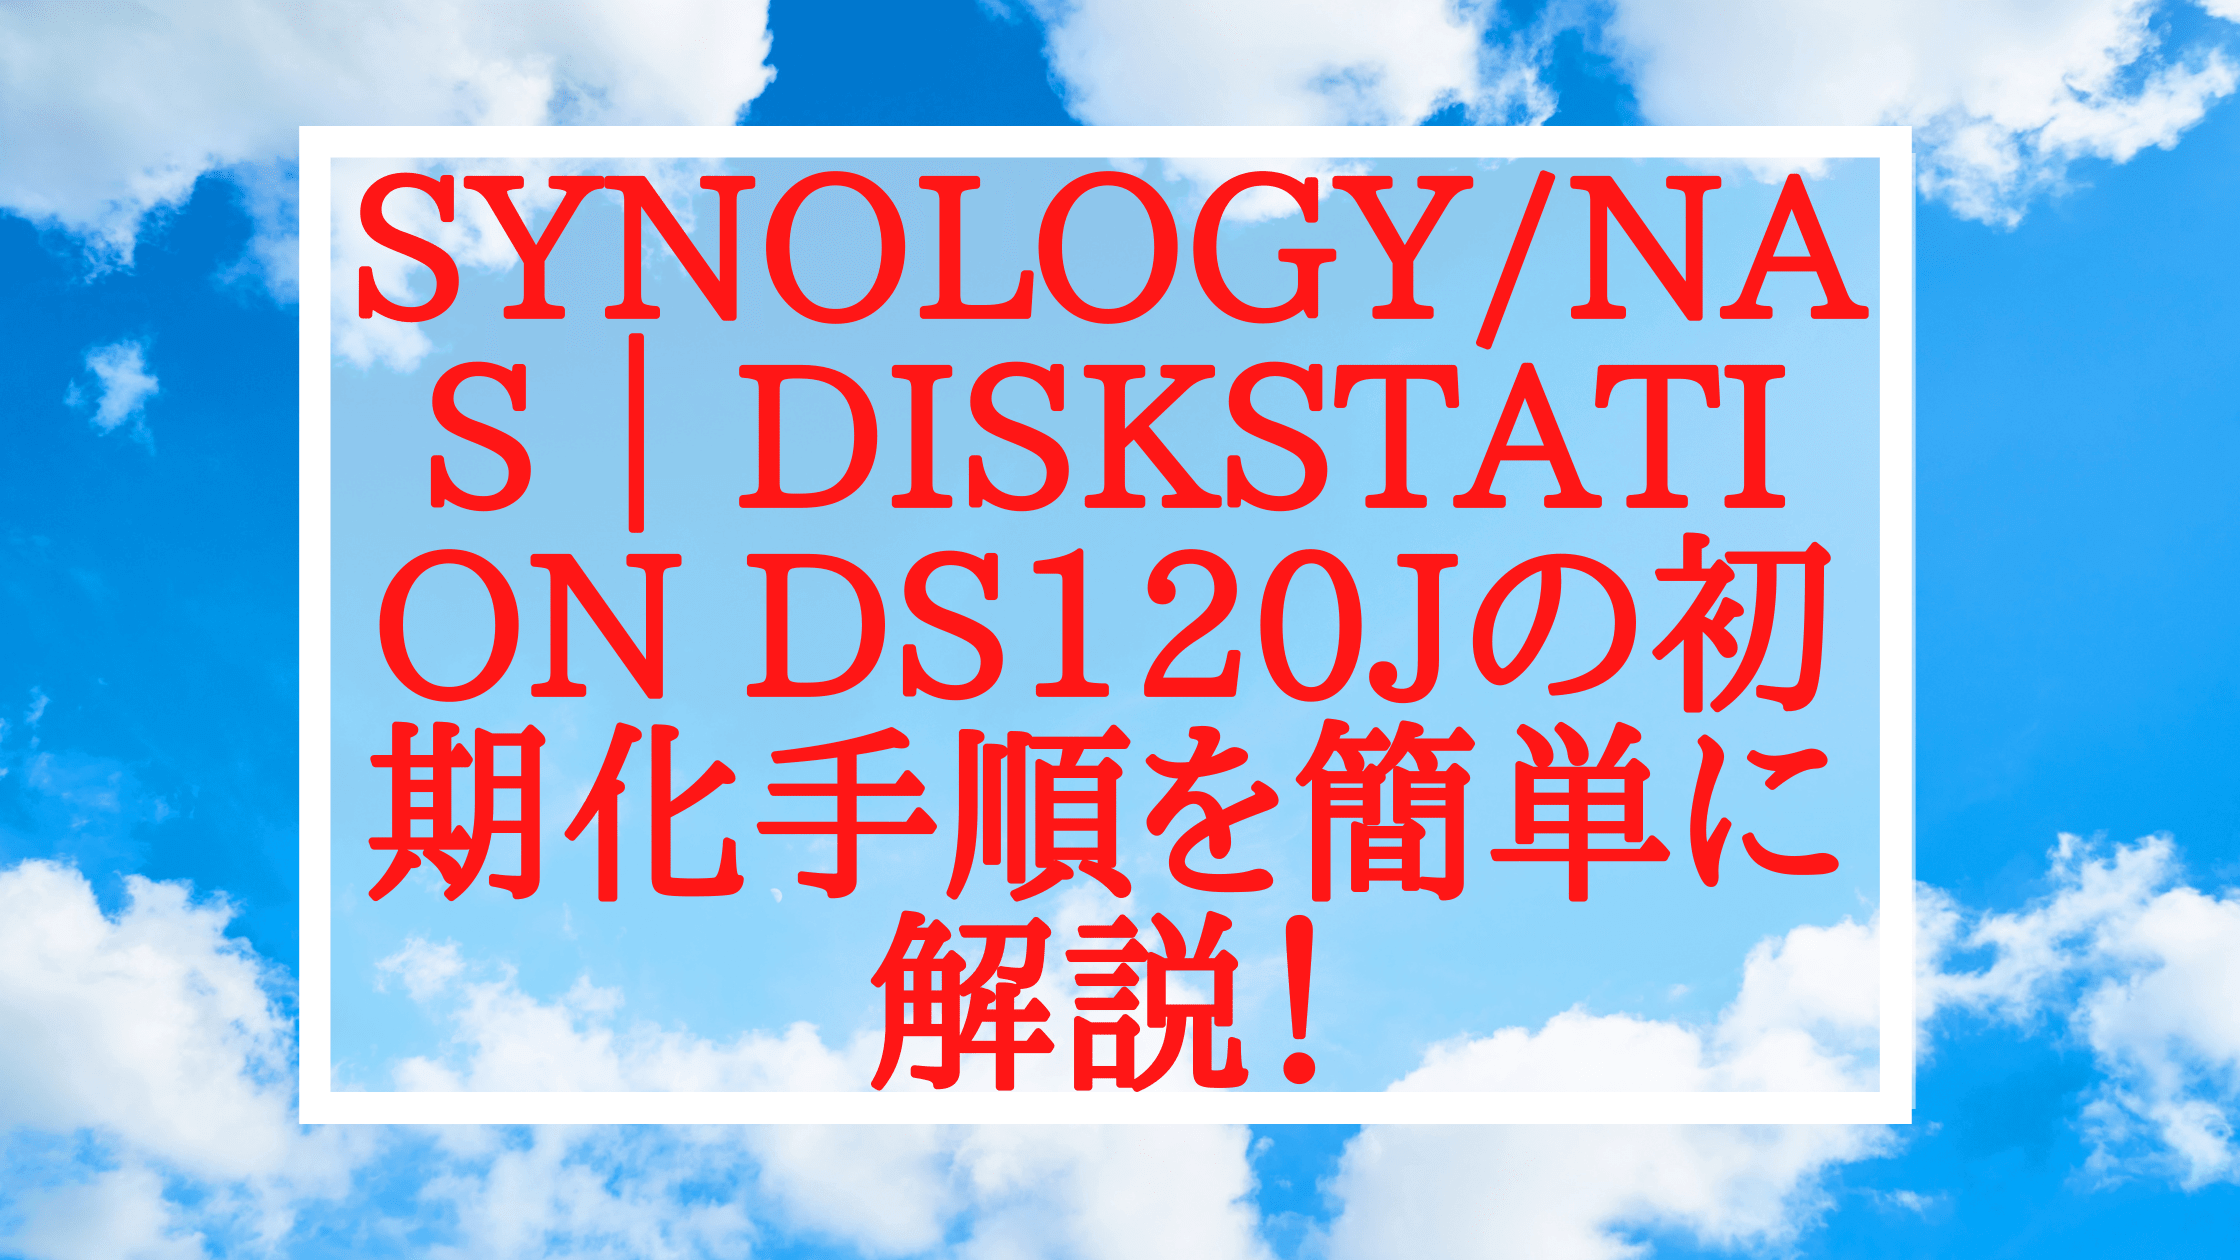 ［Synology/NAS］DiskStation DS120j/JPの初期化！所要時間1分の手順を簡単に解説！